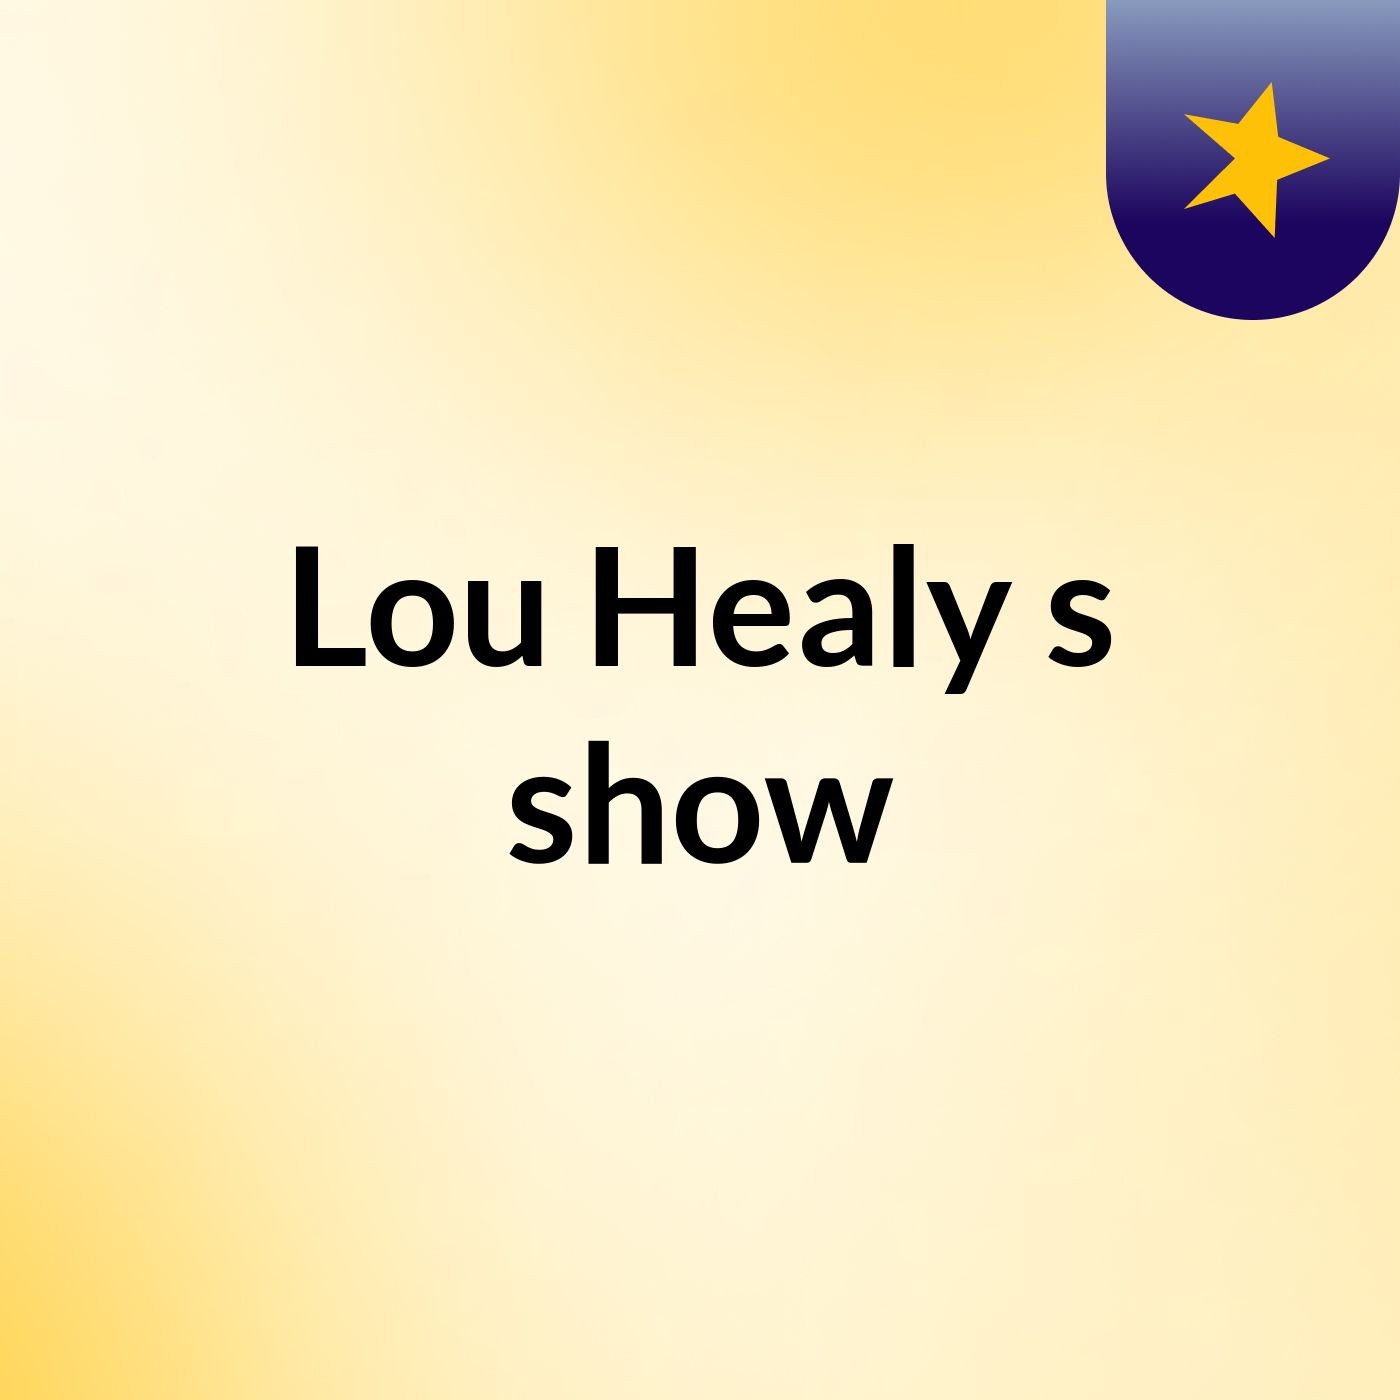 Lou Healy's show